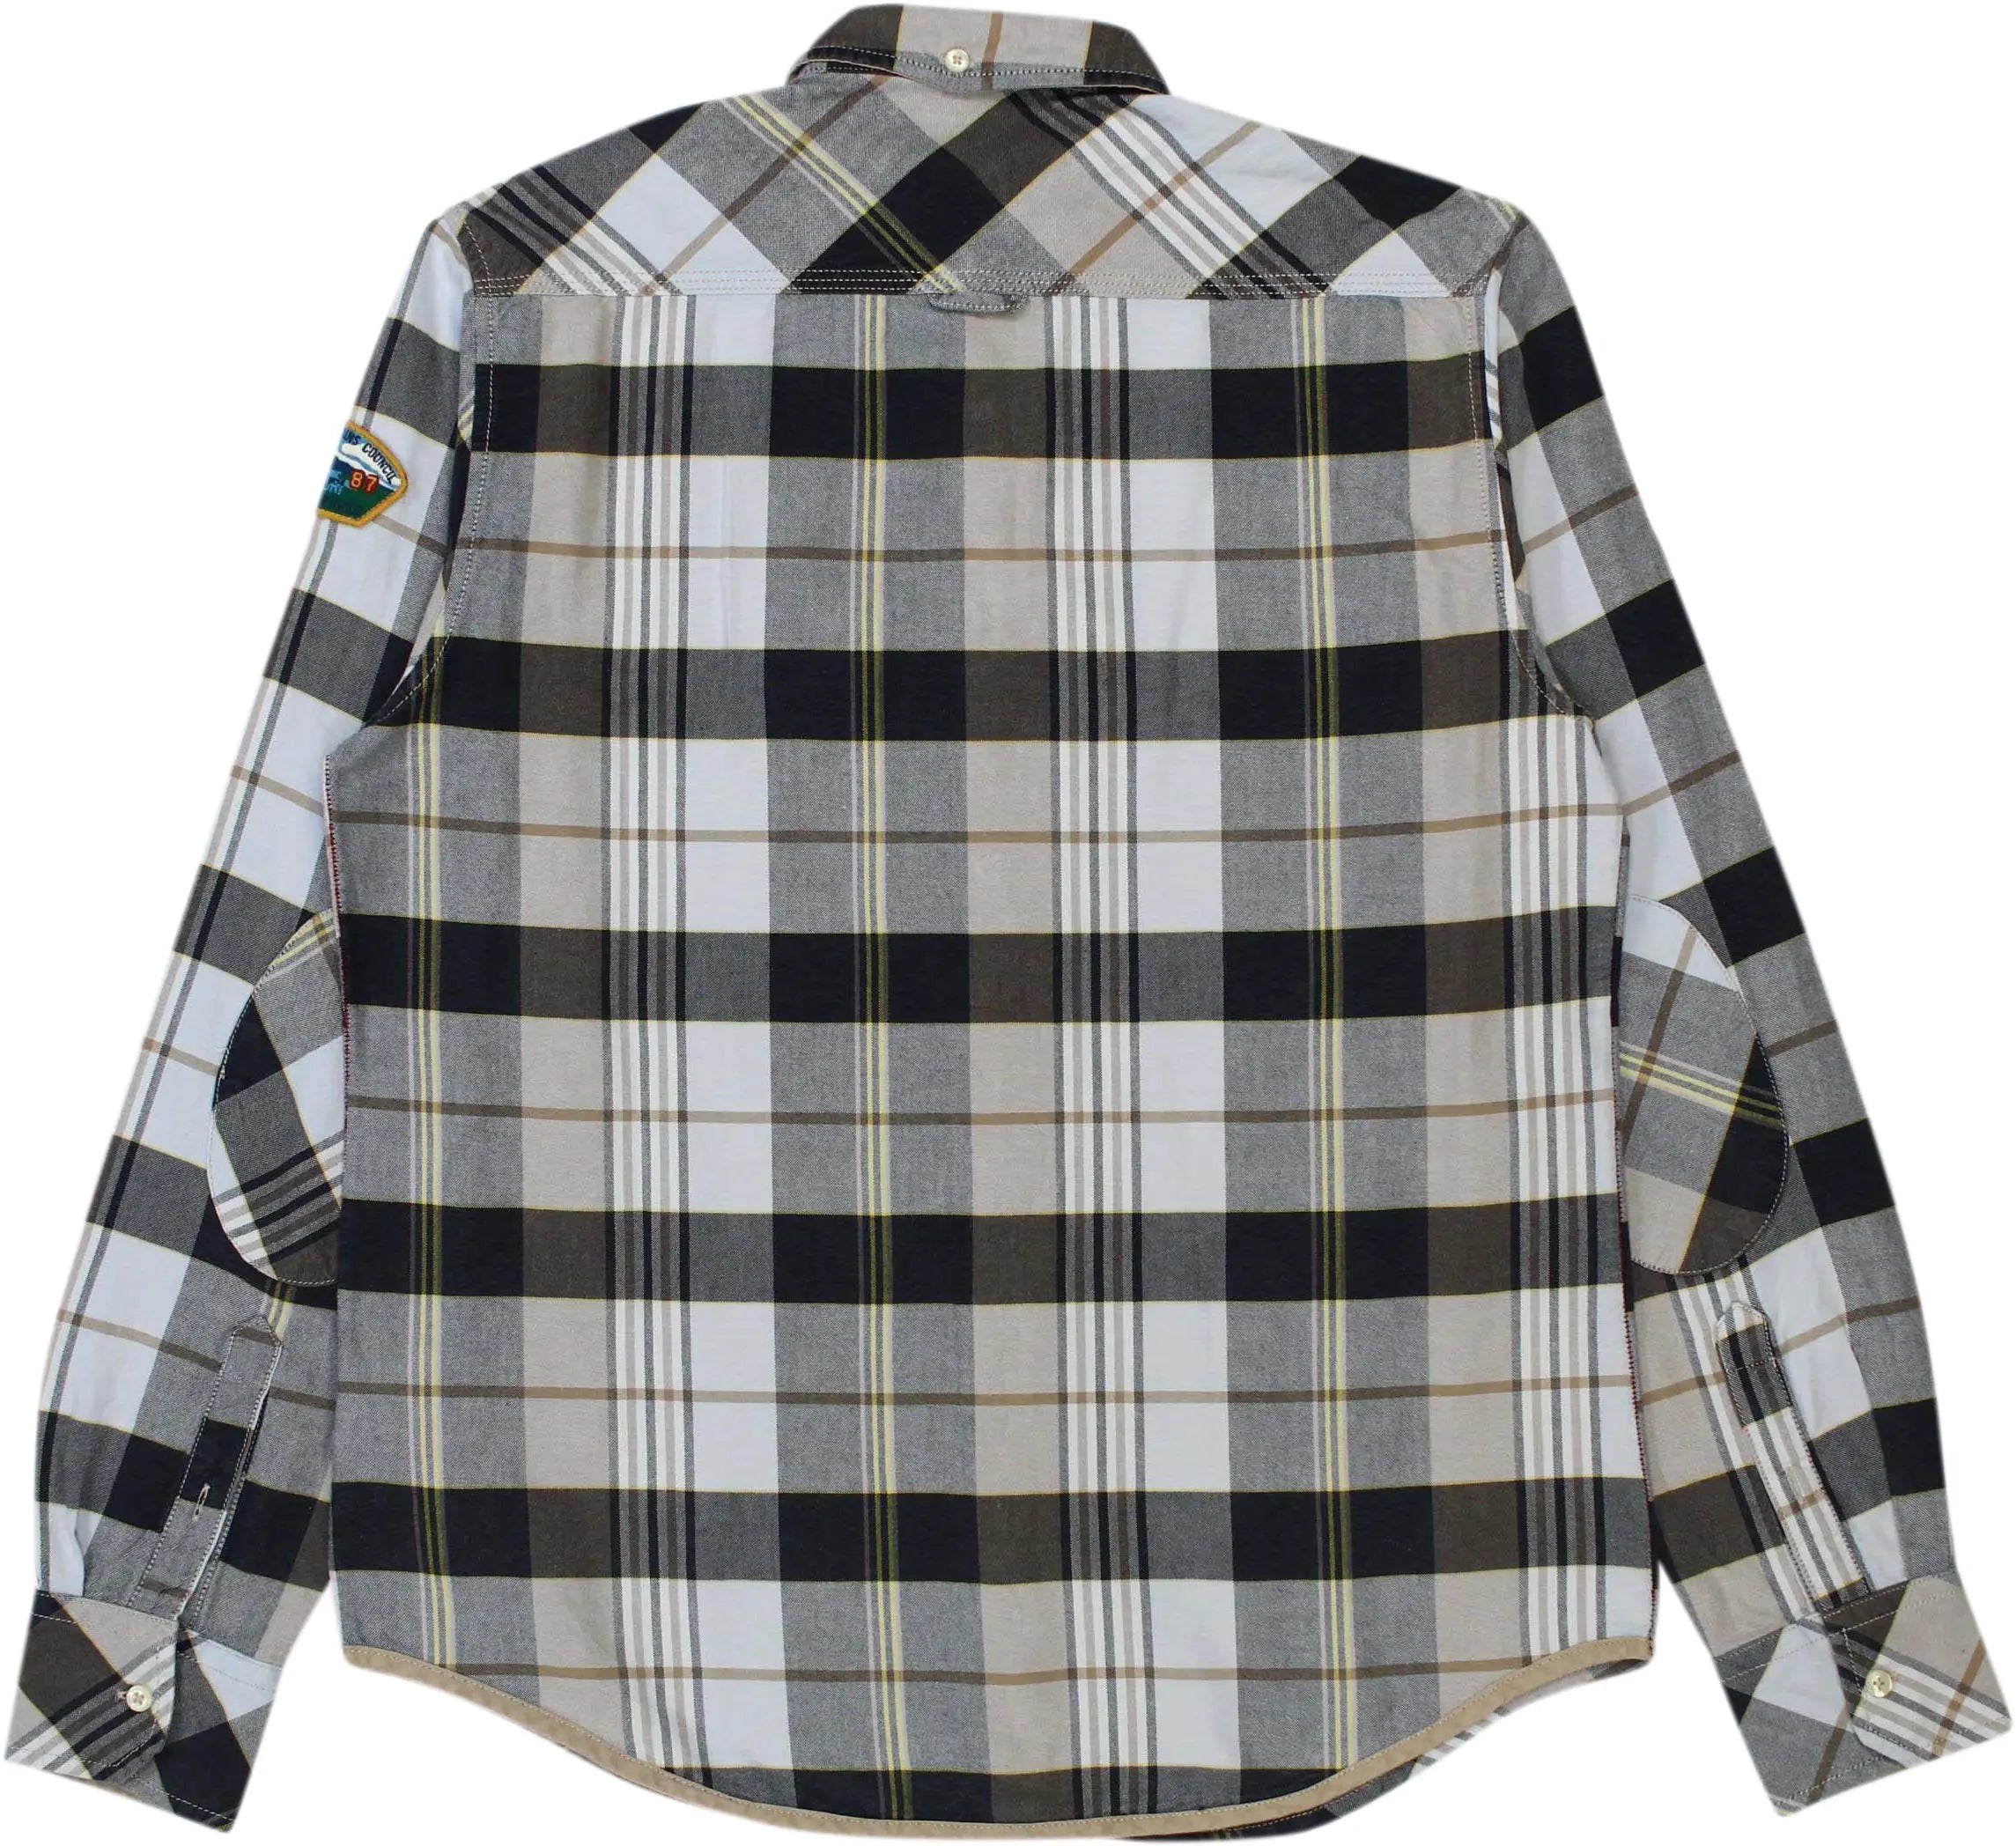 Napapijri - Vintage Napapijri Checked Flannel Lined Shirt- ThriftTale.com - Vintage and second handclothing